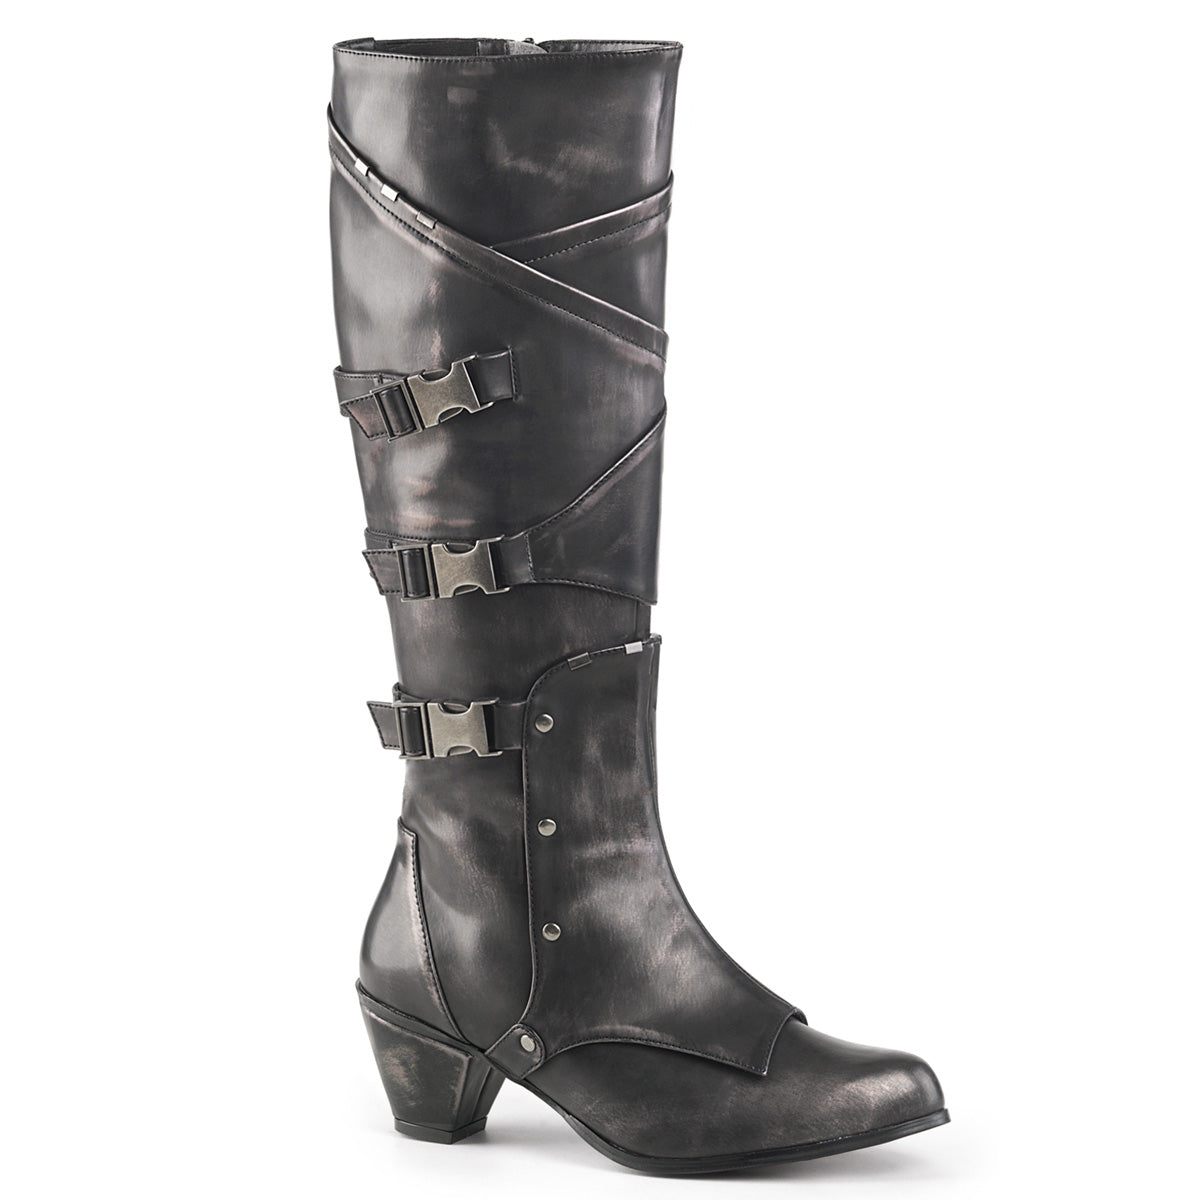 MAIDEN-8820 Pleasers Funtasma 2.5 Inch Heel Pewter Women's Boots